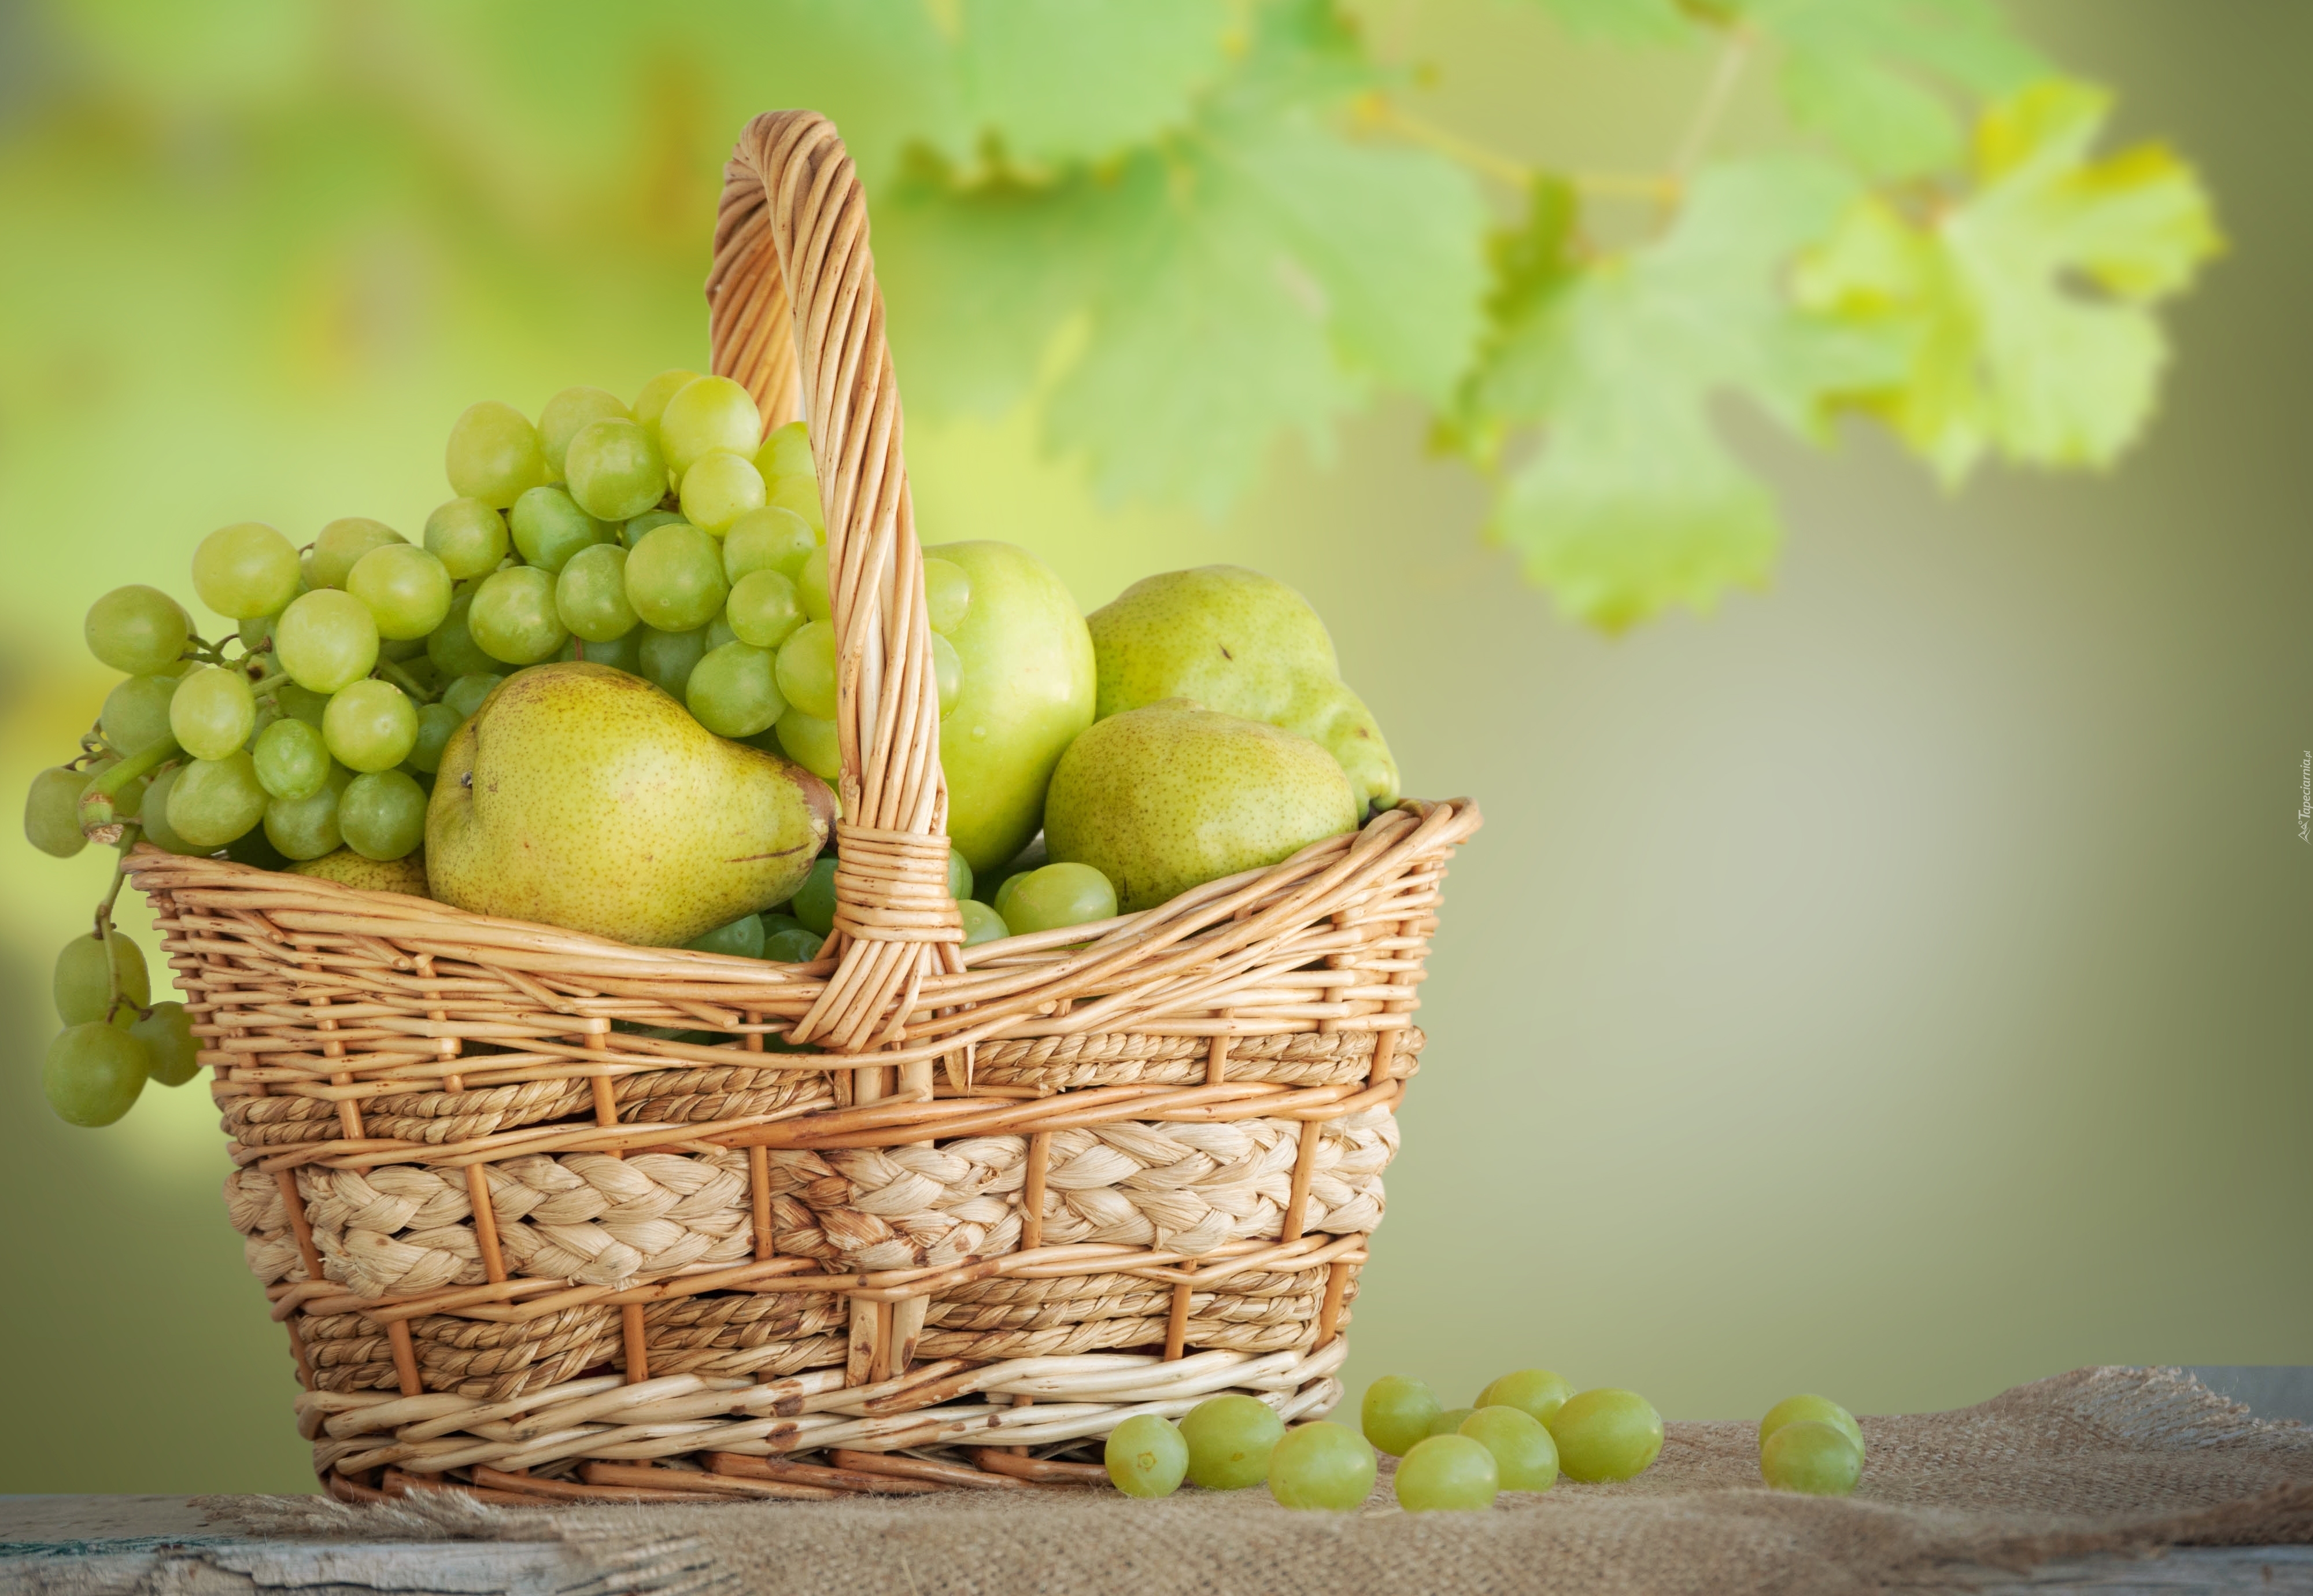 Grape pear. Корзина с фруктами. Виноград и яблоки. Яблоки виноград фрукты в корзинке. Зеленые яблоки и виноград.